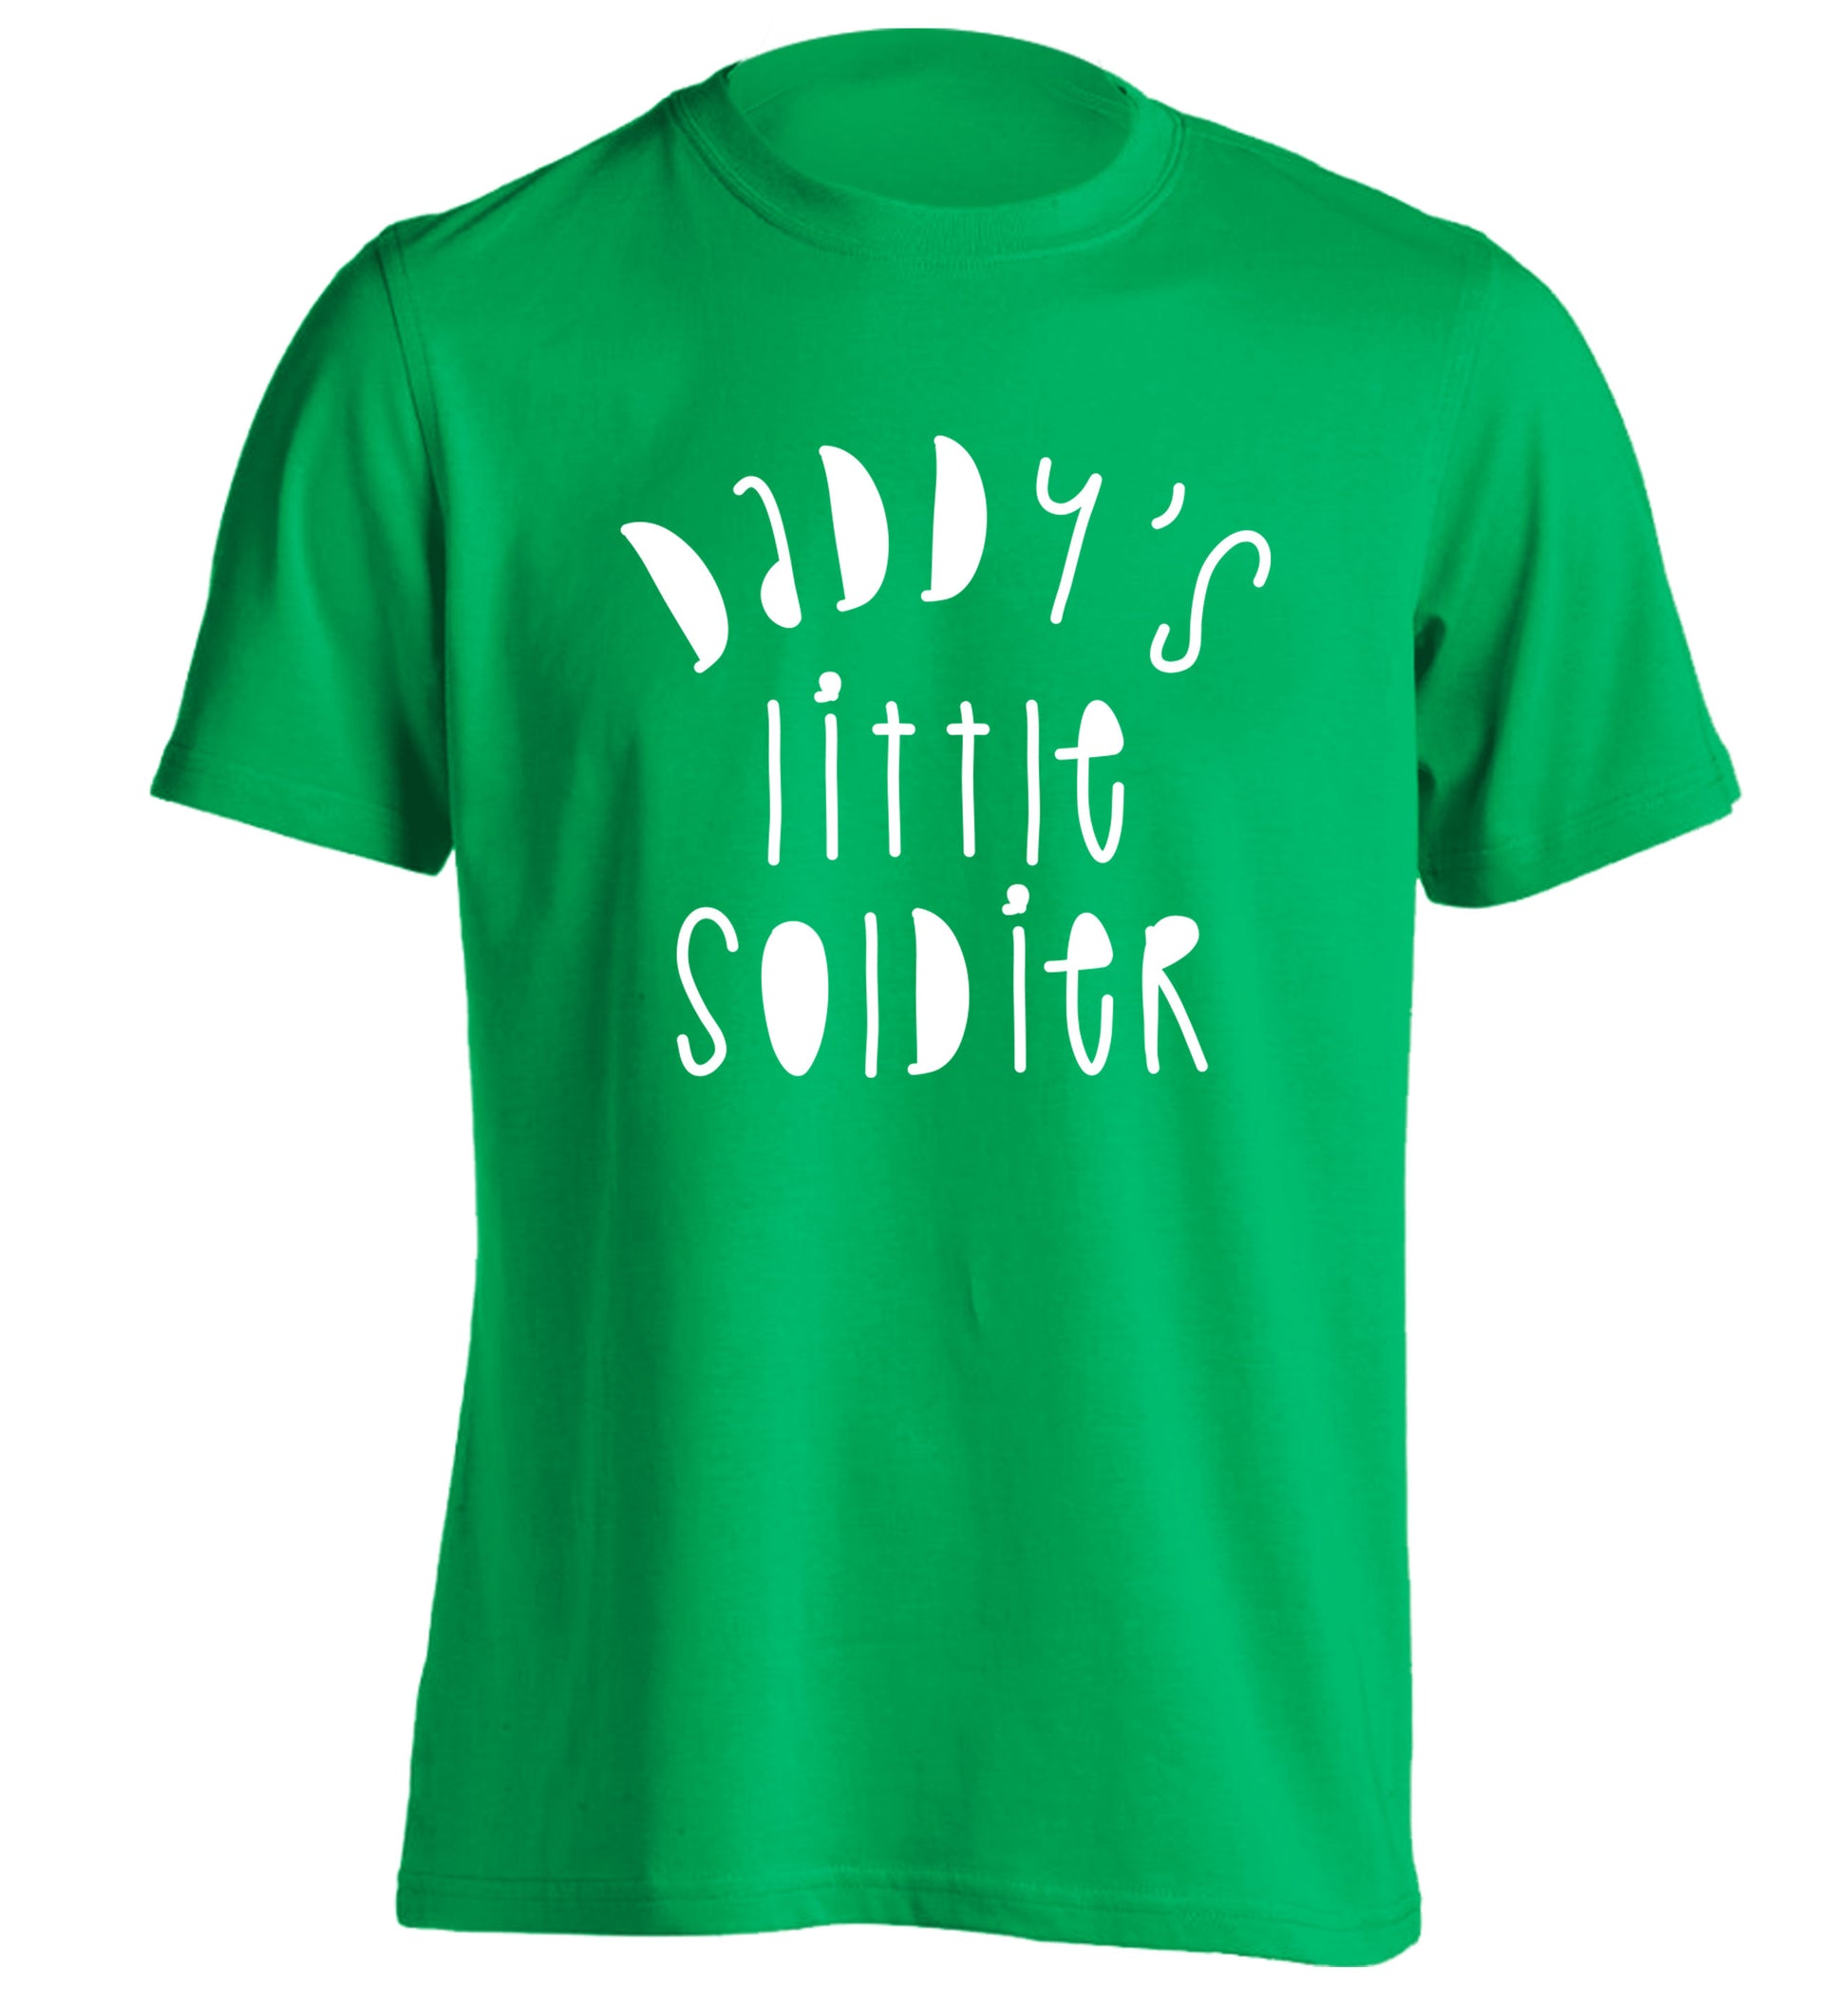 Daddy's little soldier adults unisex green Tshirt 2XL